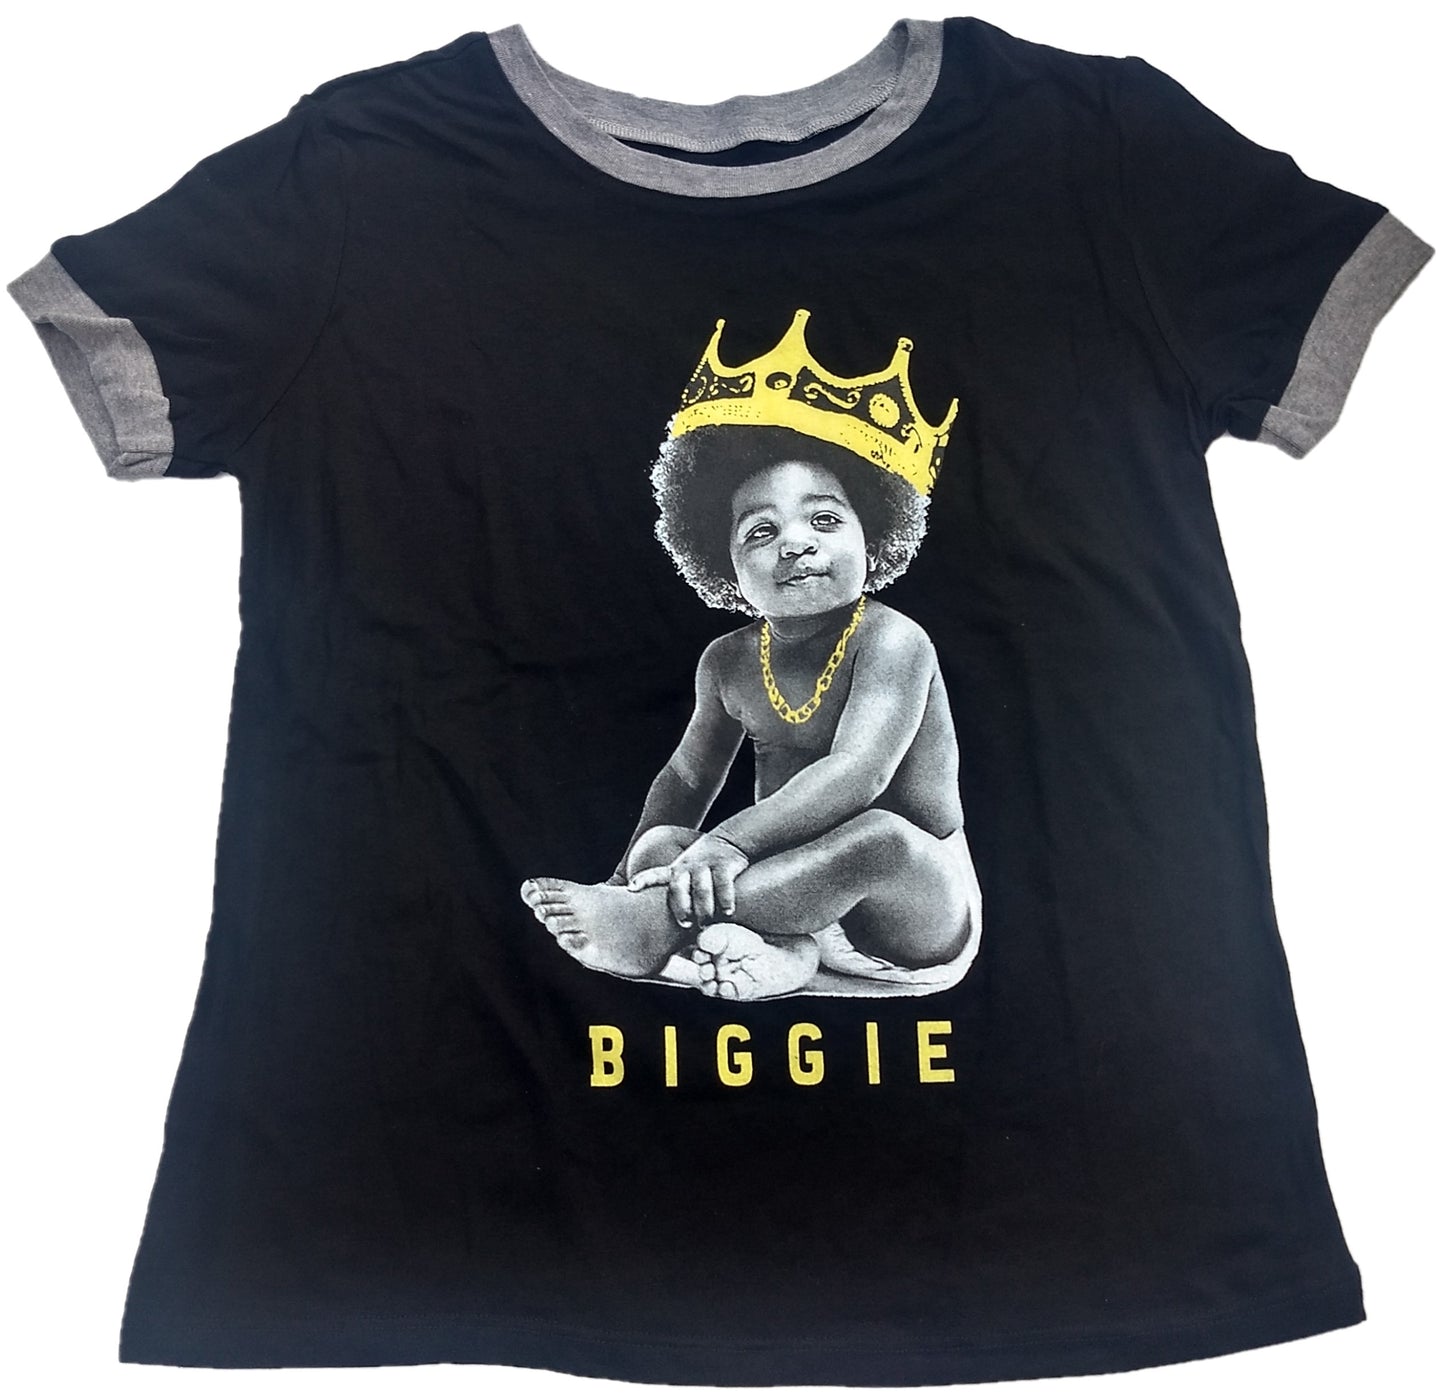 The Notorious B.I.G. BIGGIE Rap Music Boys T-Shirt